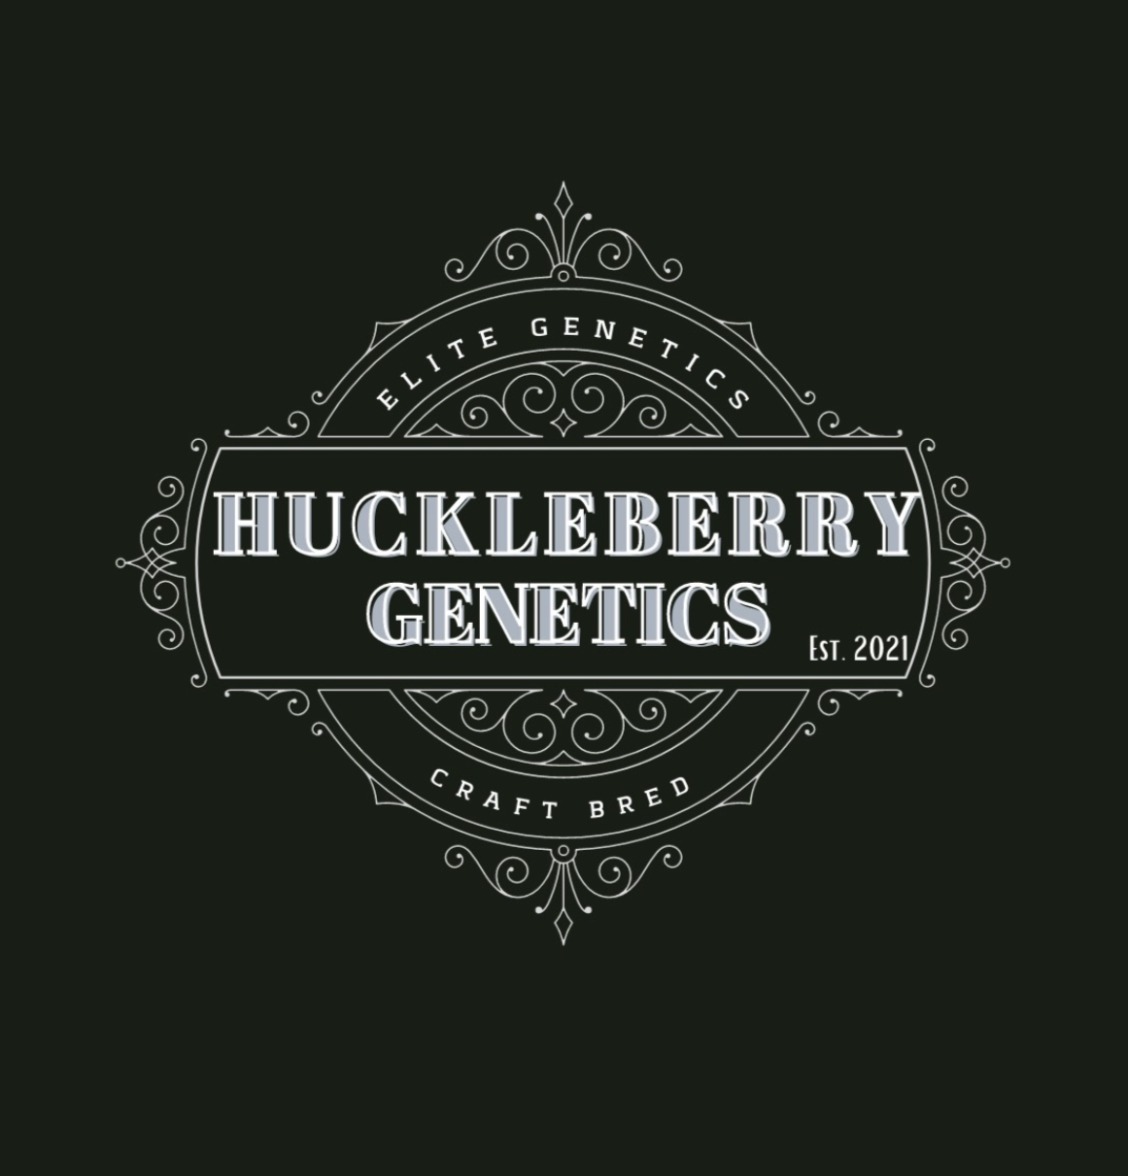 huckleberrygeneticslogo_edited.jpg